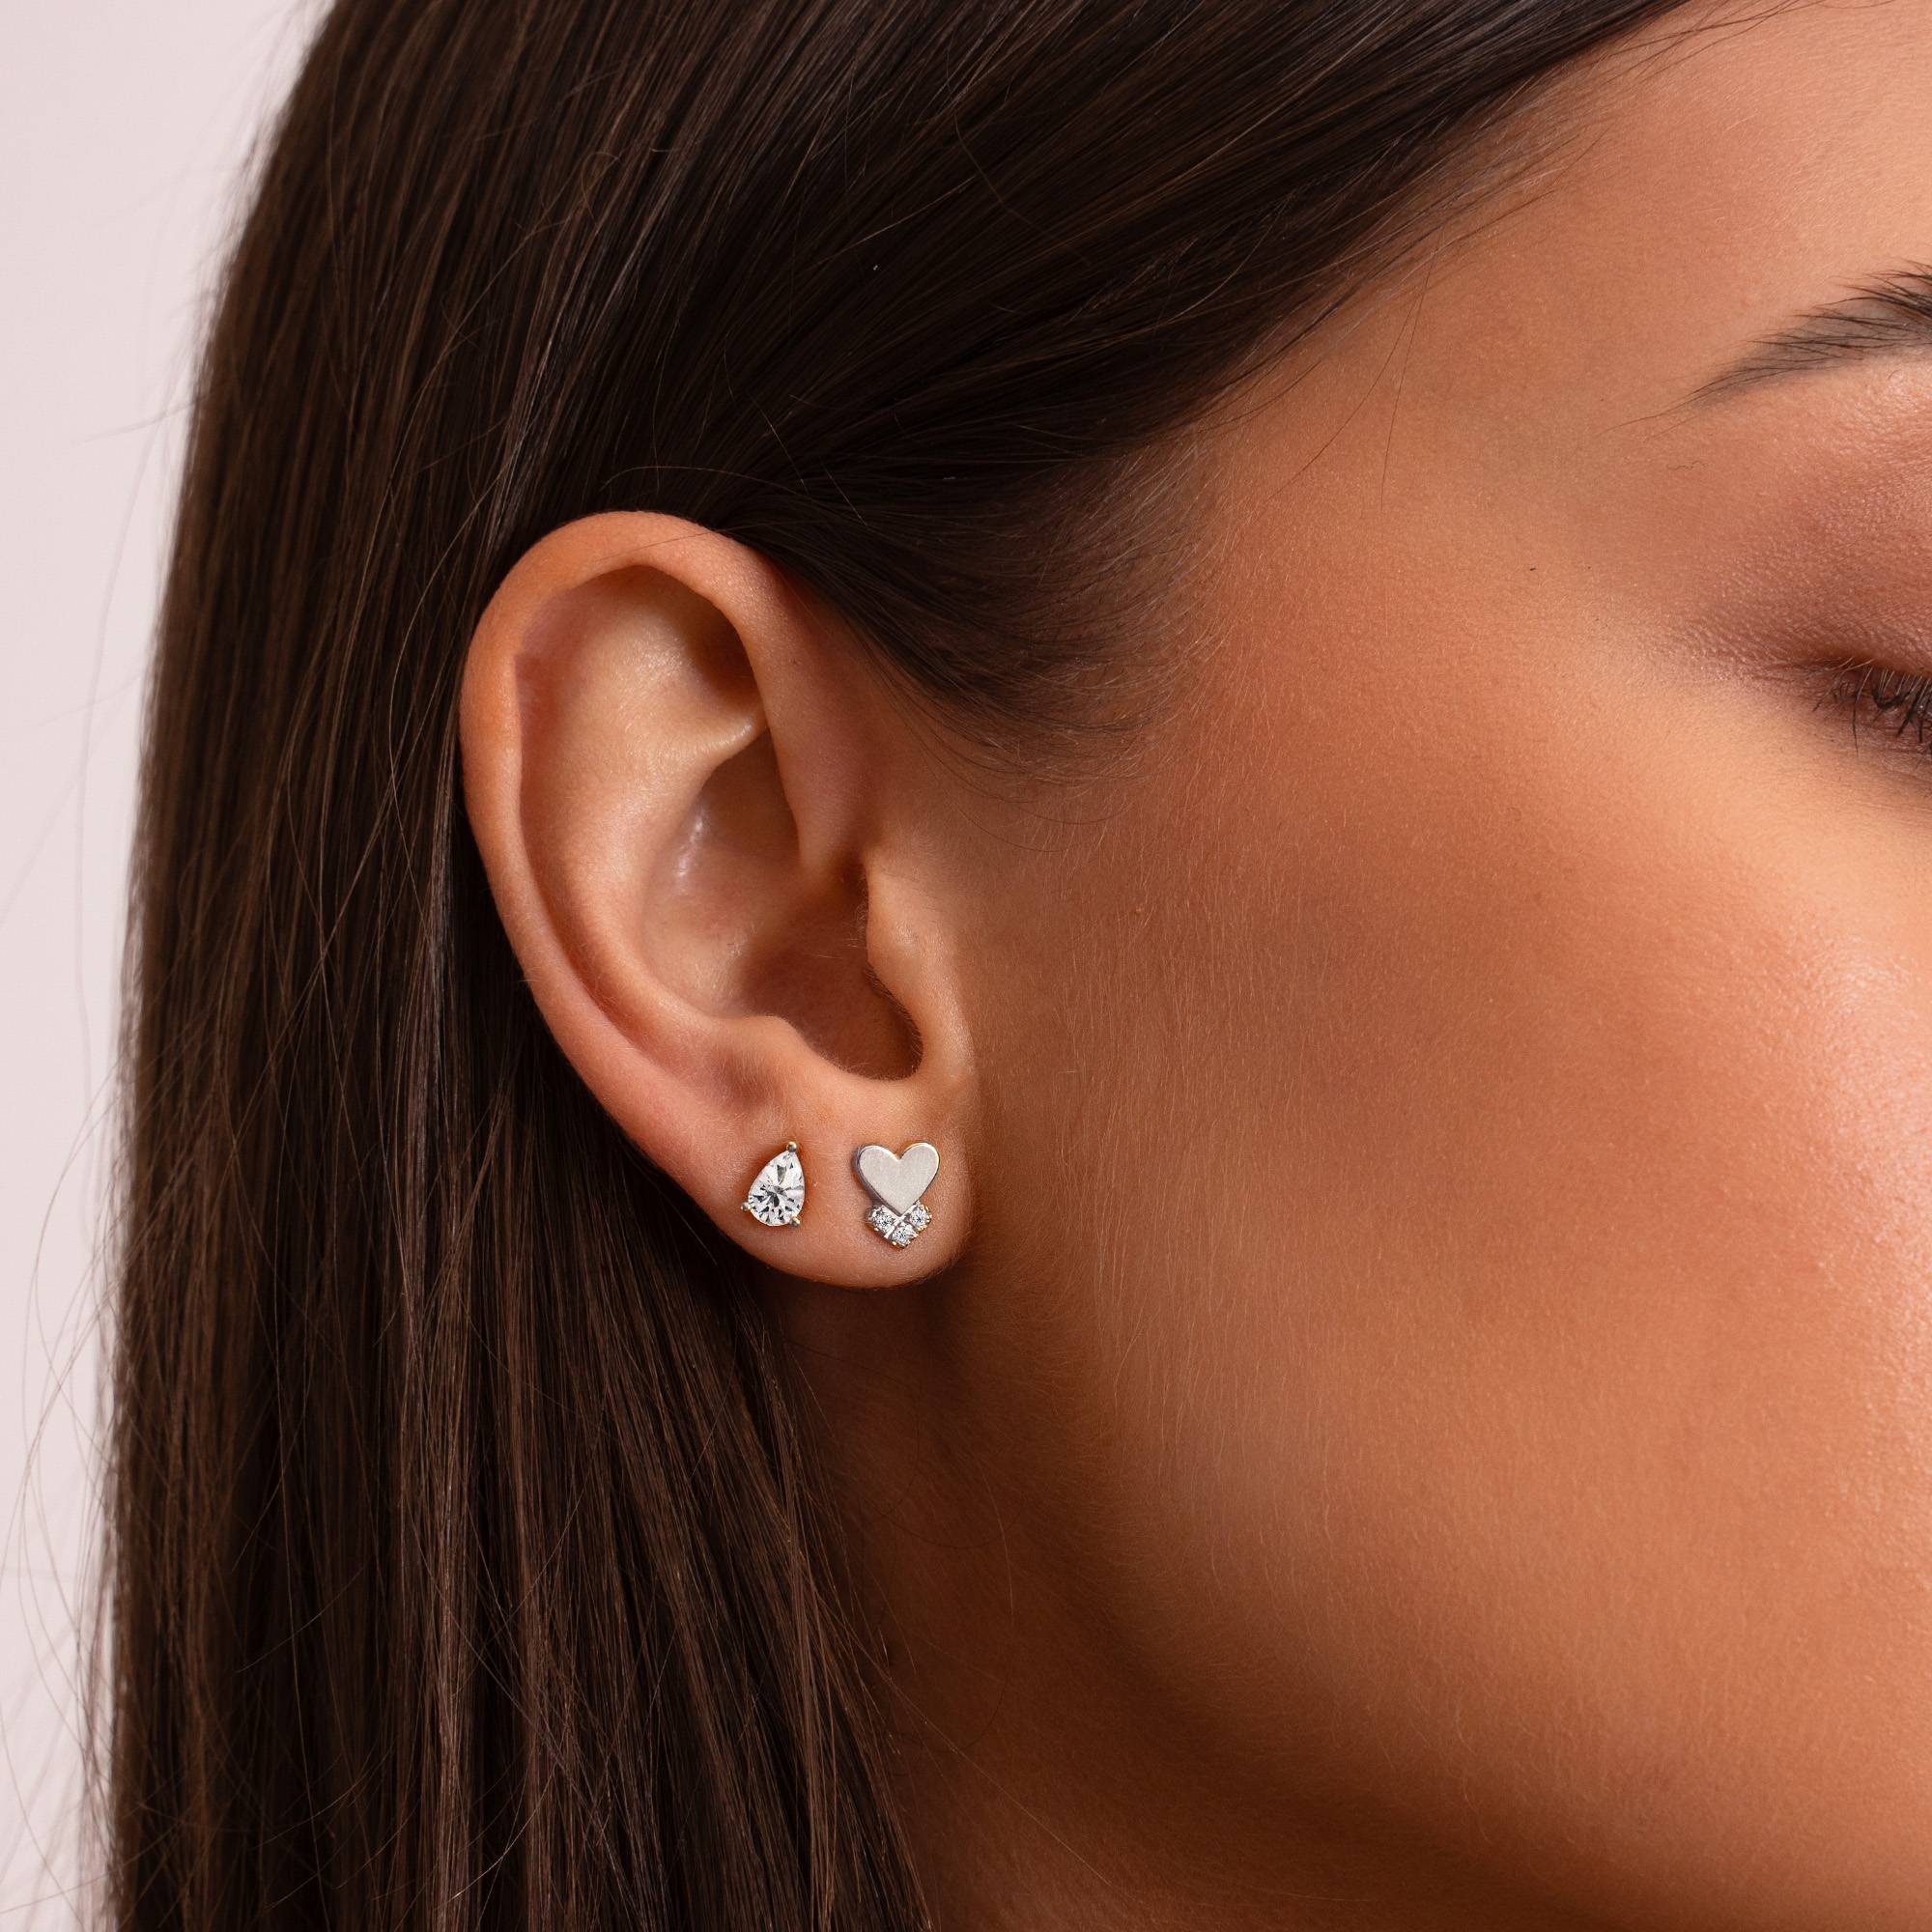 Dakota Heart Earrings with Diamonds in Sterling Silver-4 product photo